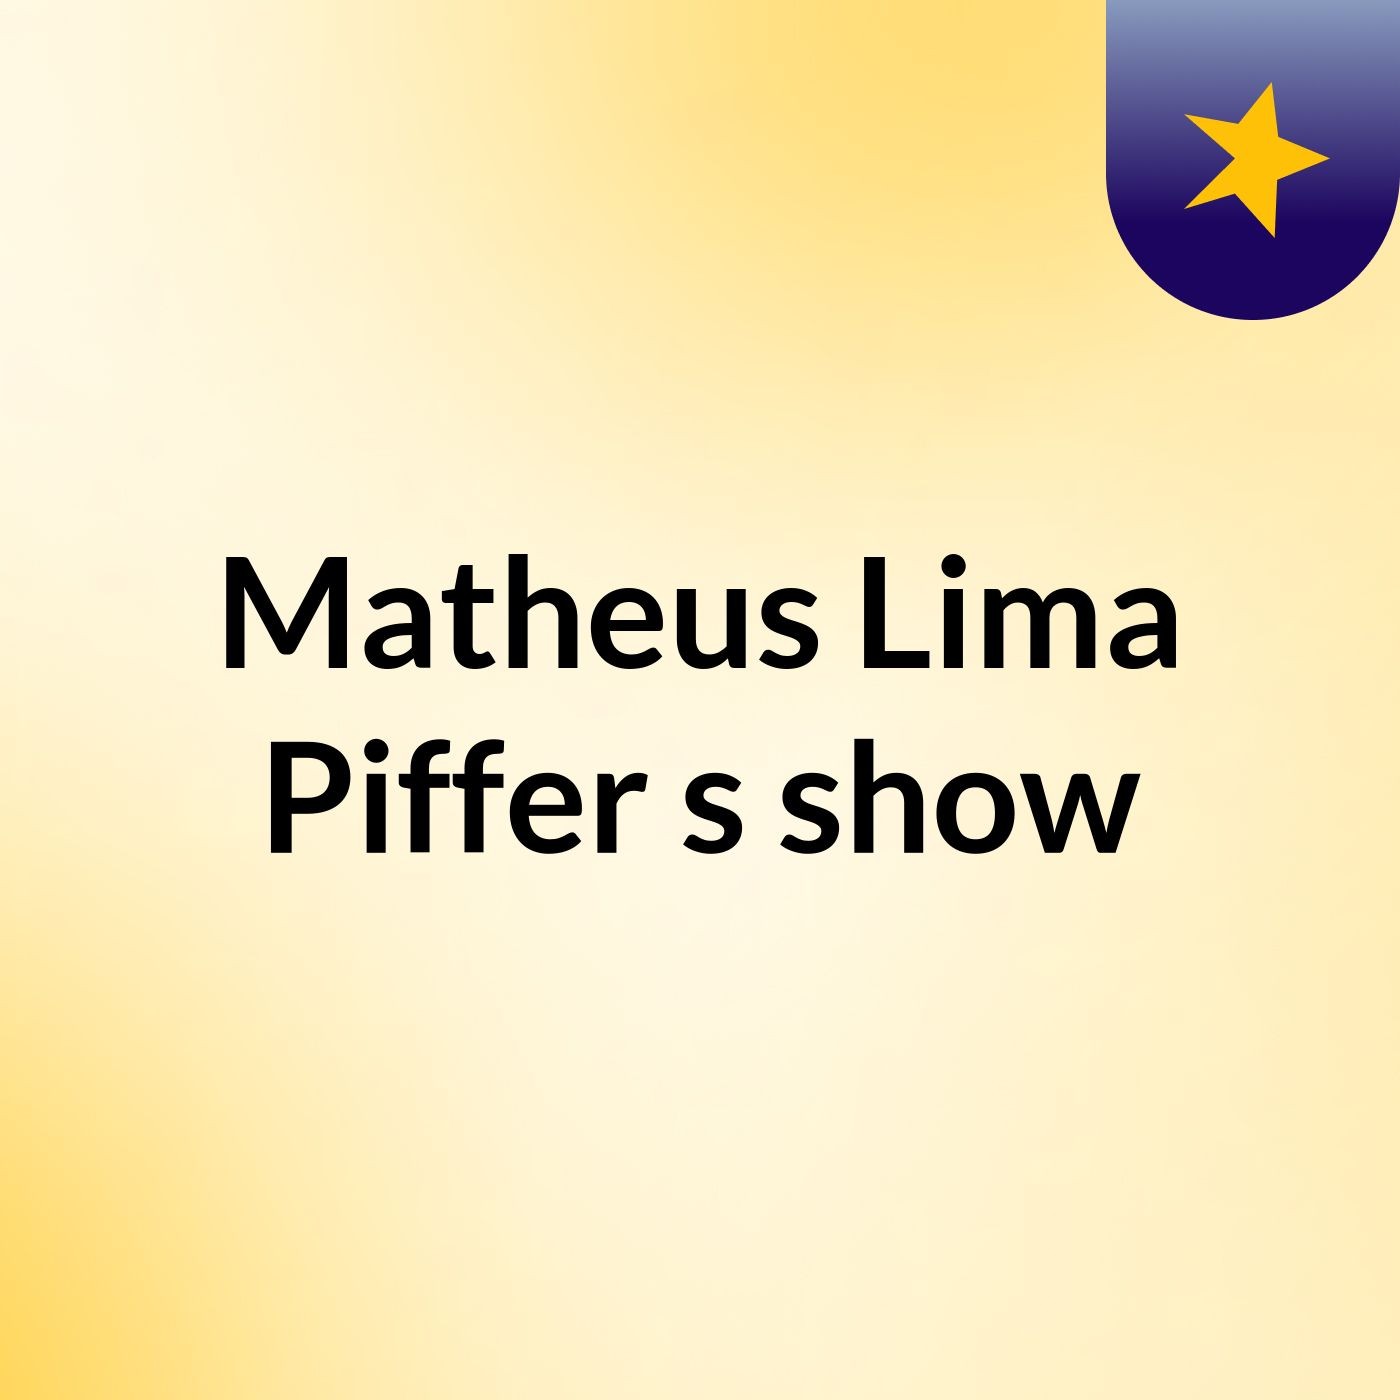 Matheus Lima Piffer's show